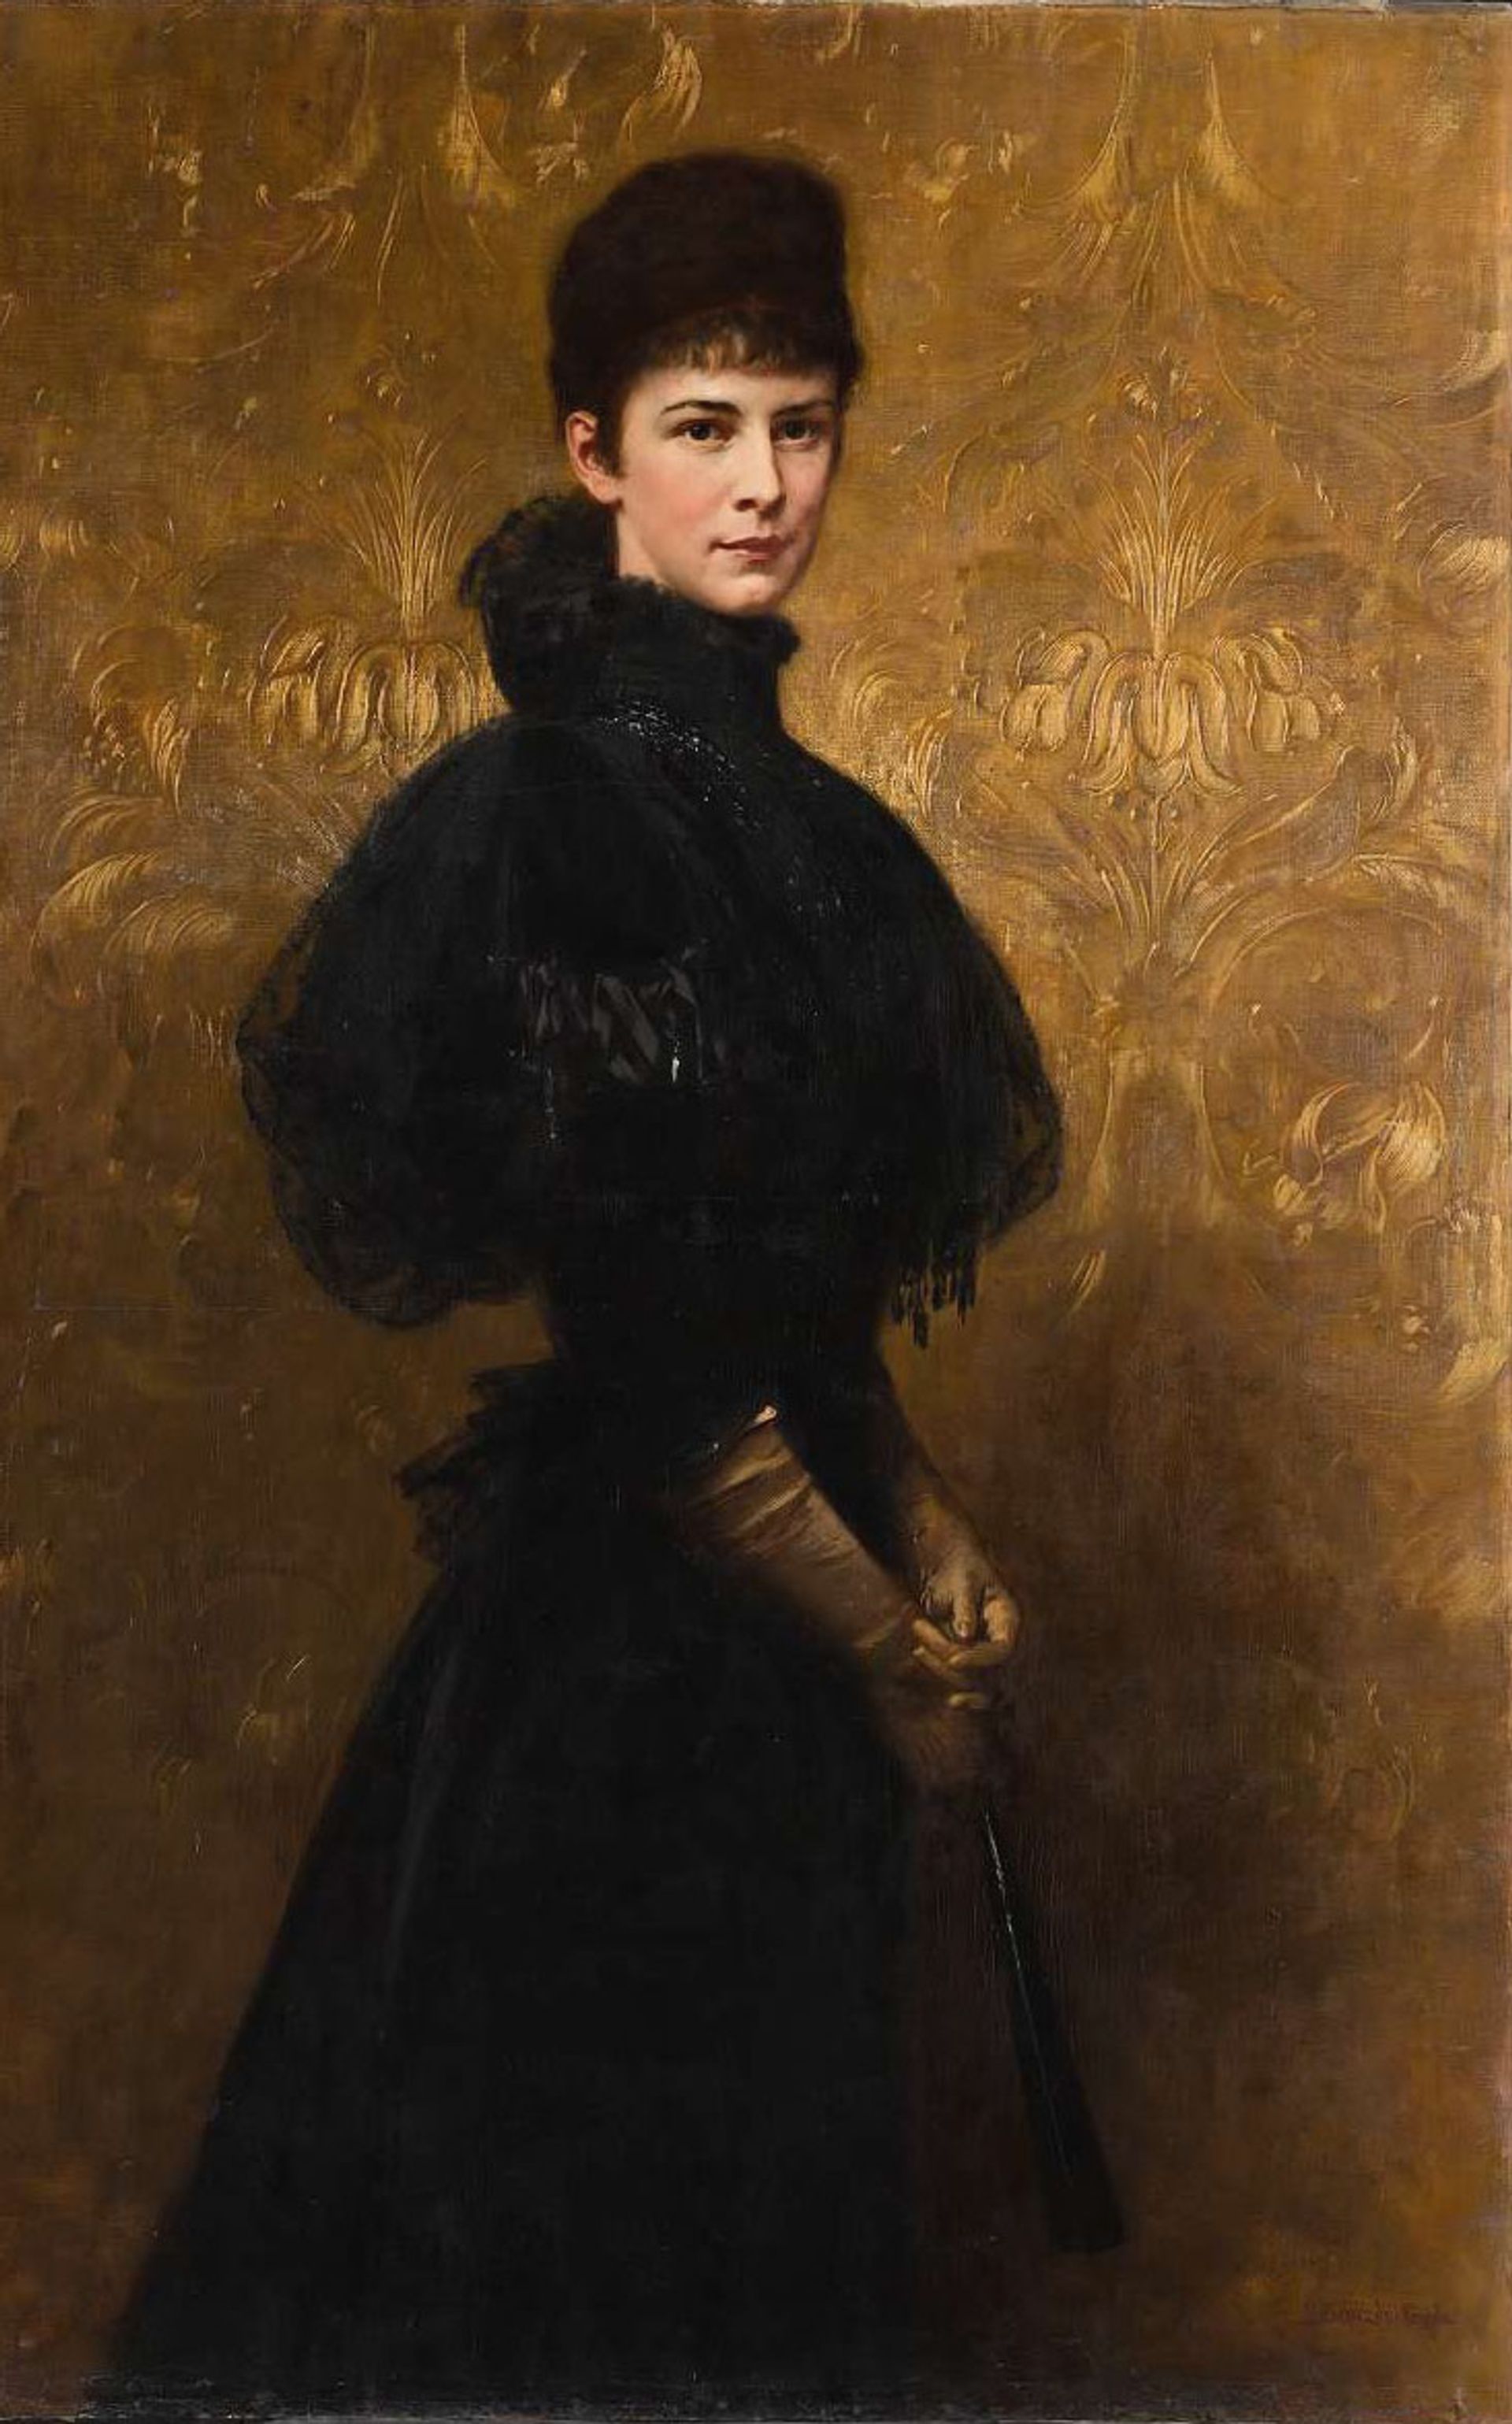 Portret keizerin Elisabeth in rouwkleding, gemaakt in 1899.